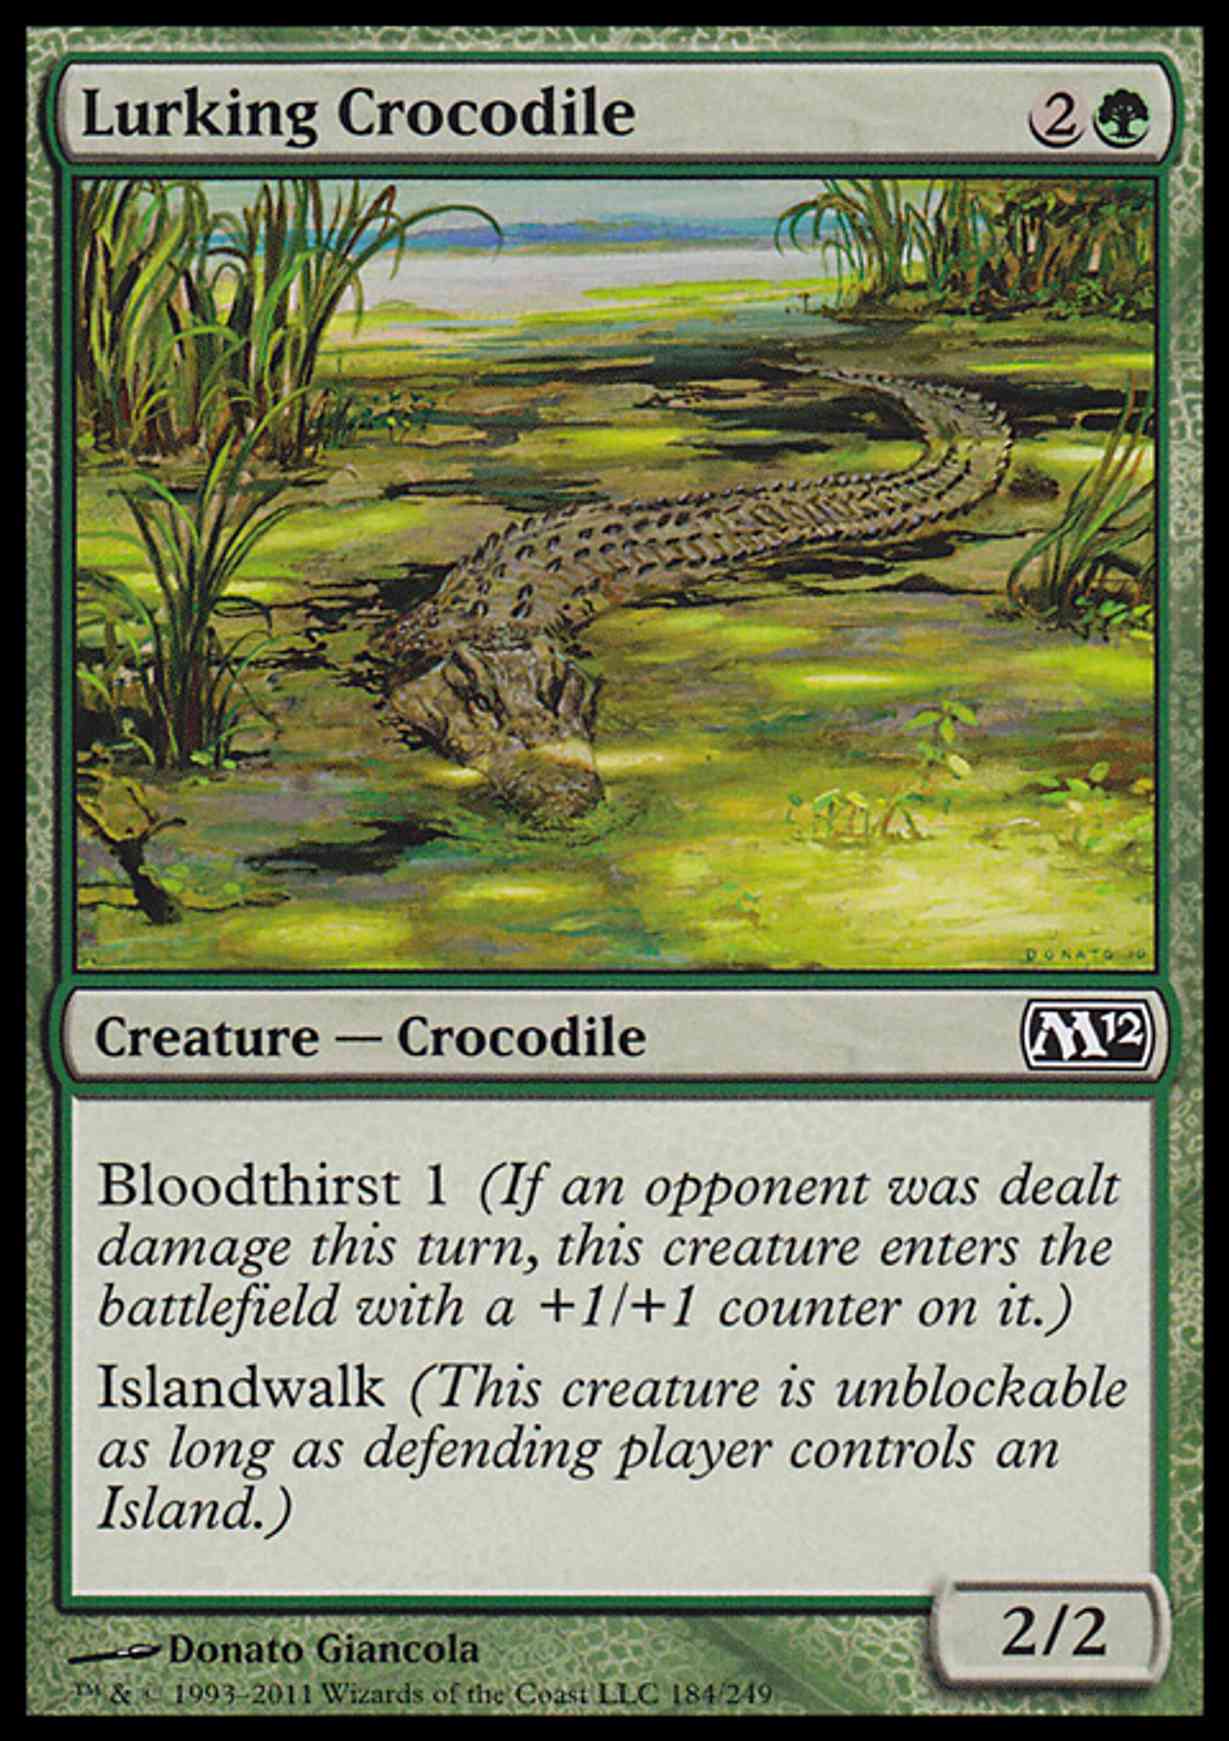 Lurking Crocodile magic card front